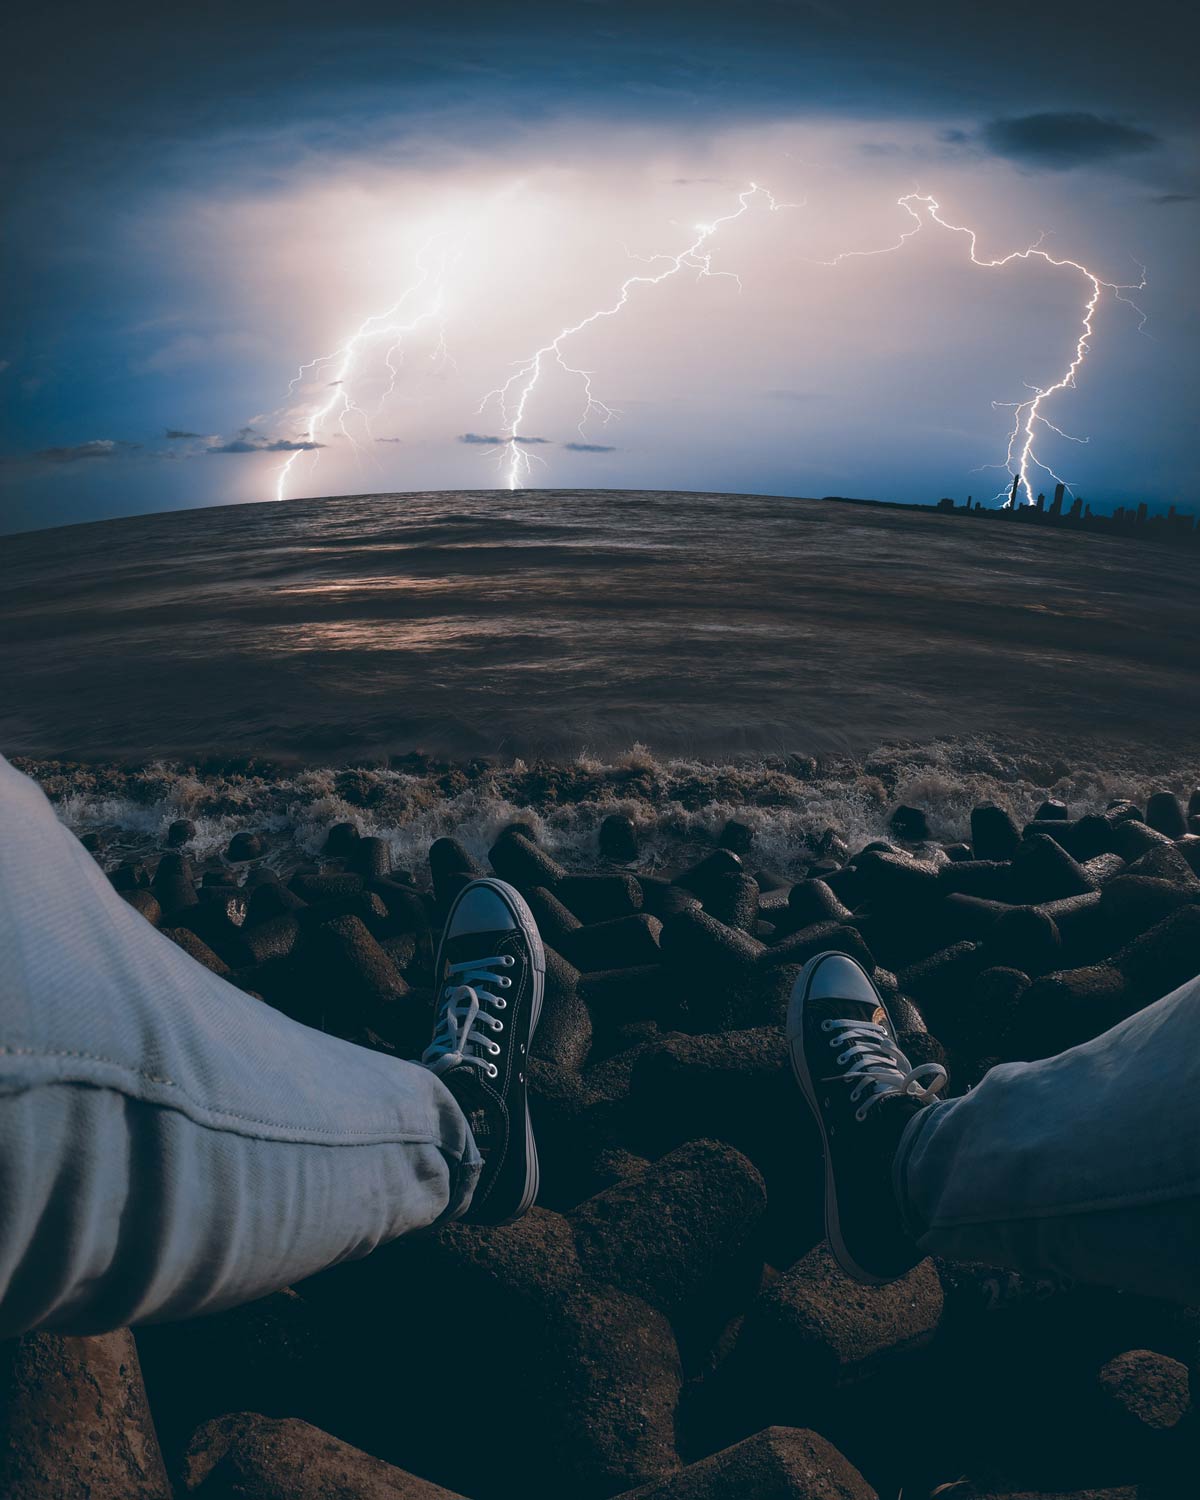 Hiker's view sitting on lake edge during lightning storm.